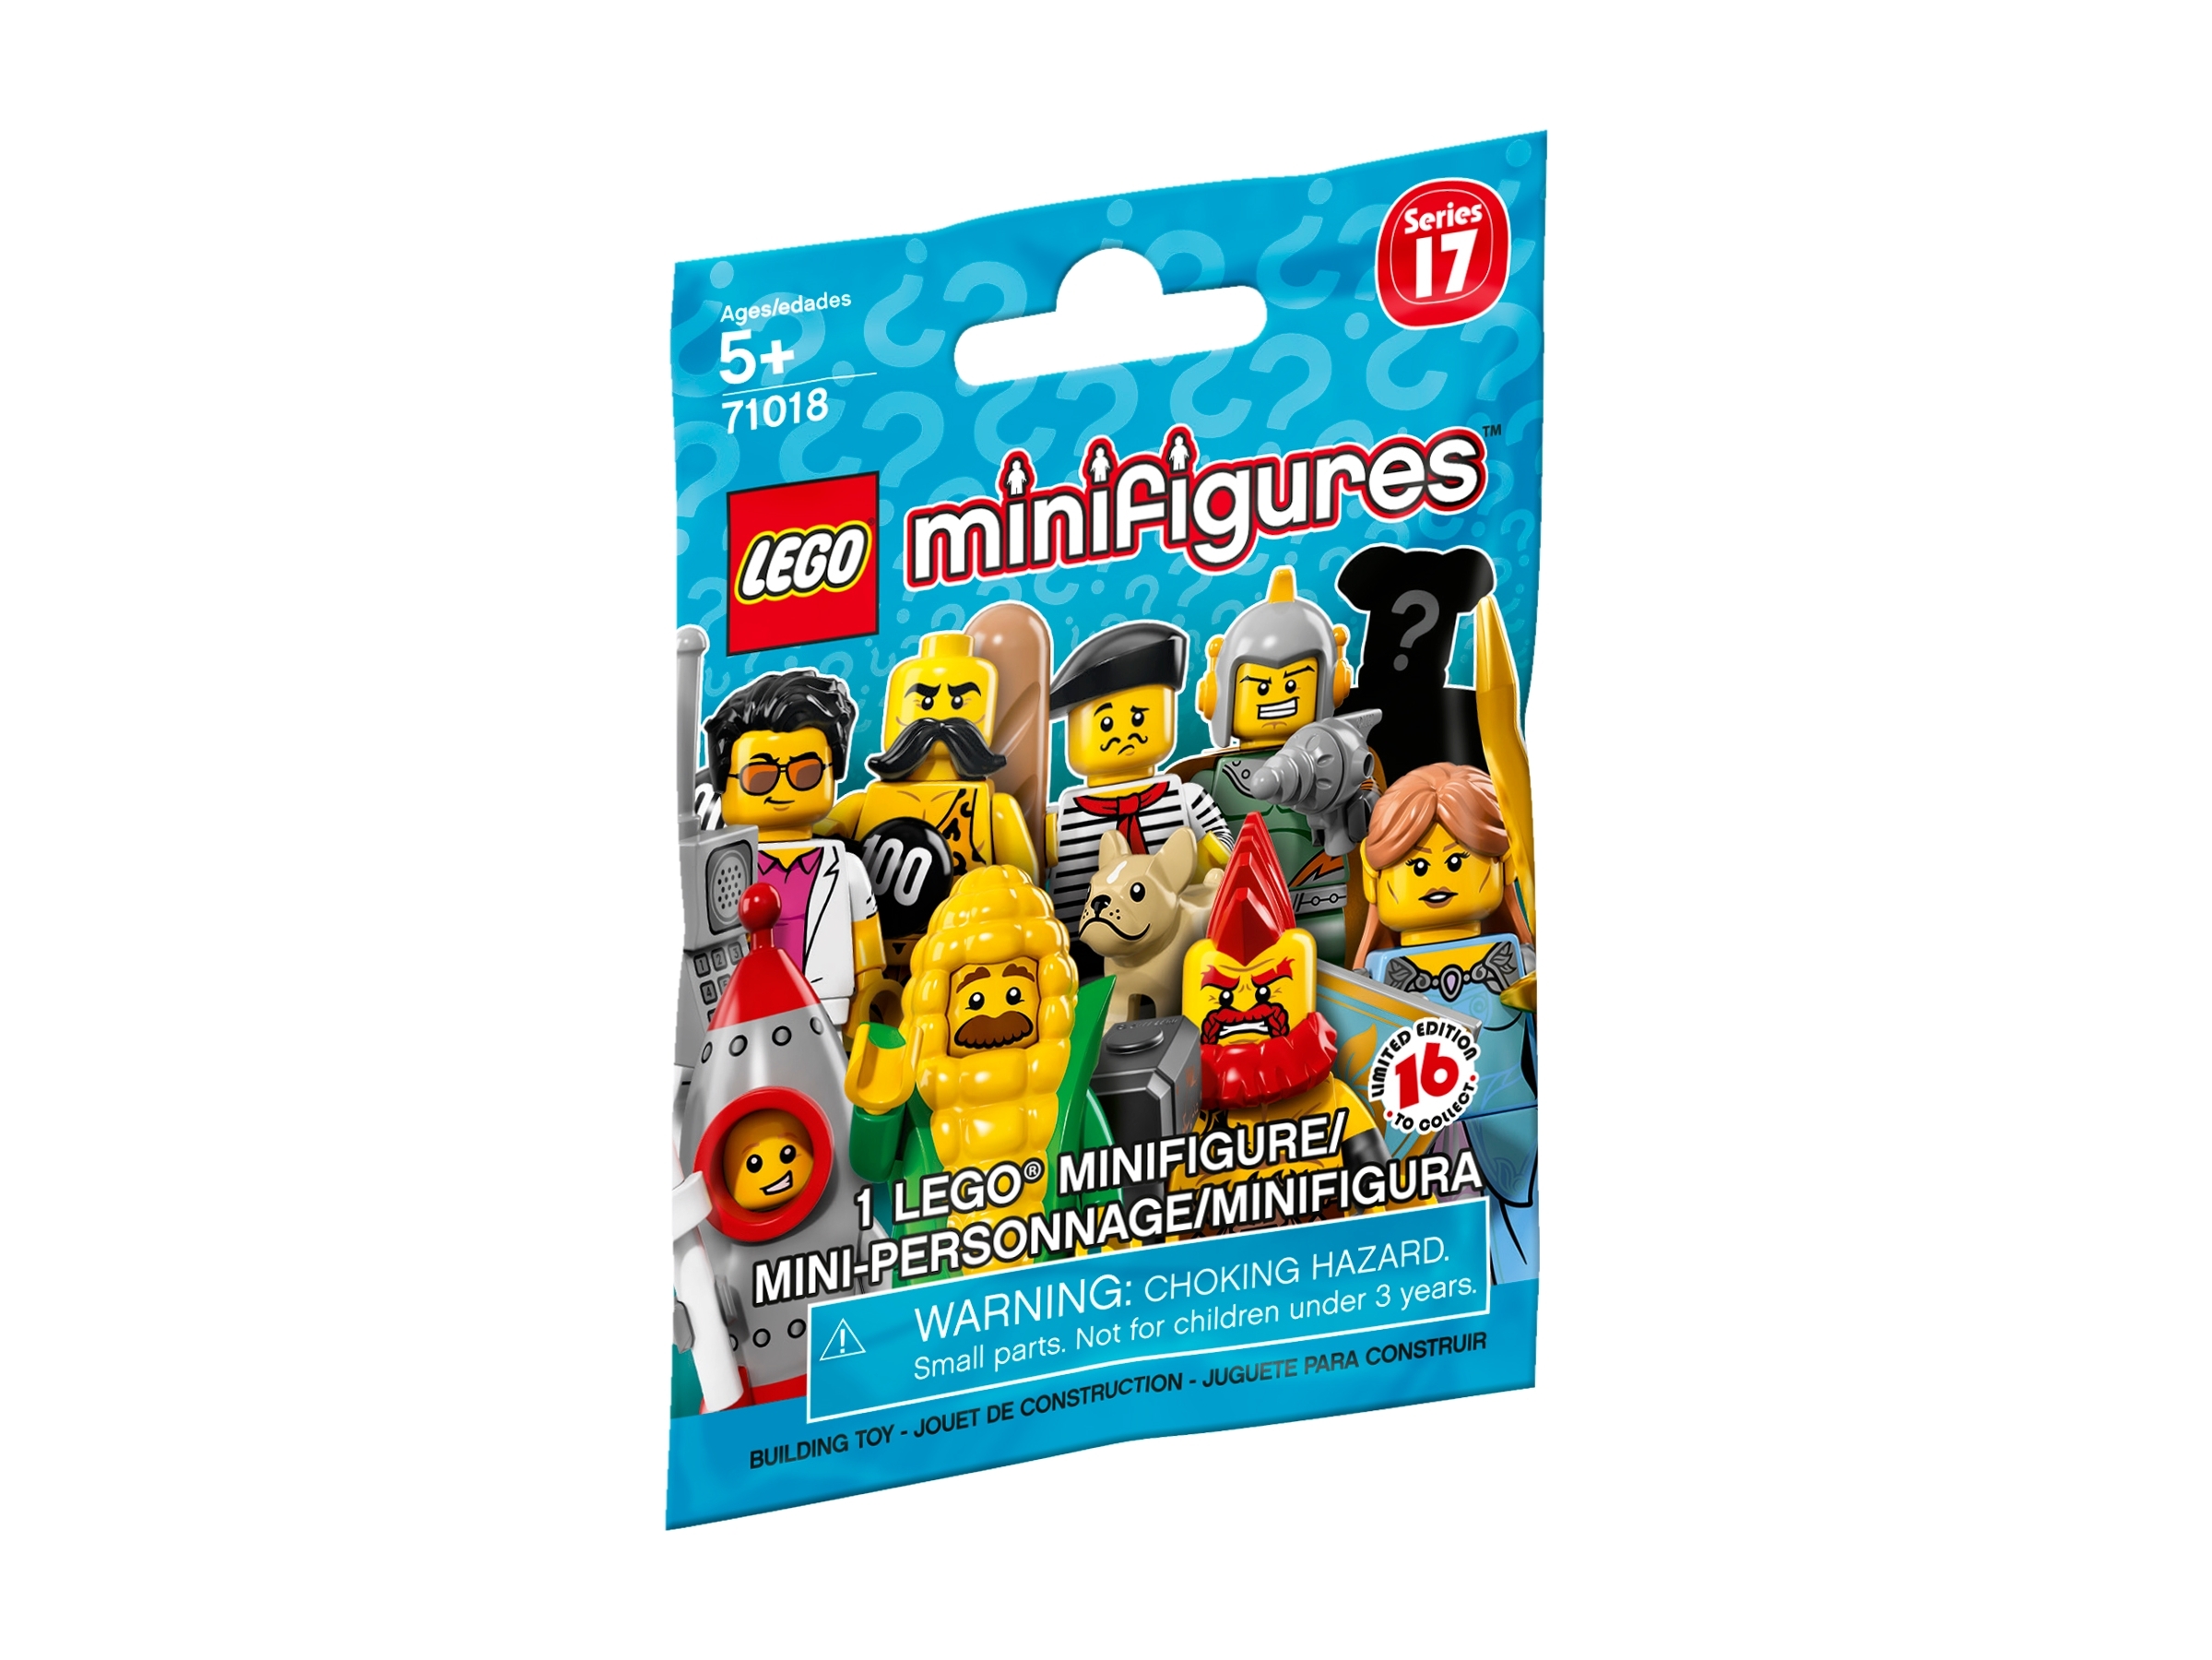 GENUINE LEGO 71018 SERIES 17 MINIFIGURE YUPPIE BUY ANY 3 GET 4TH FREE 